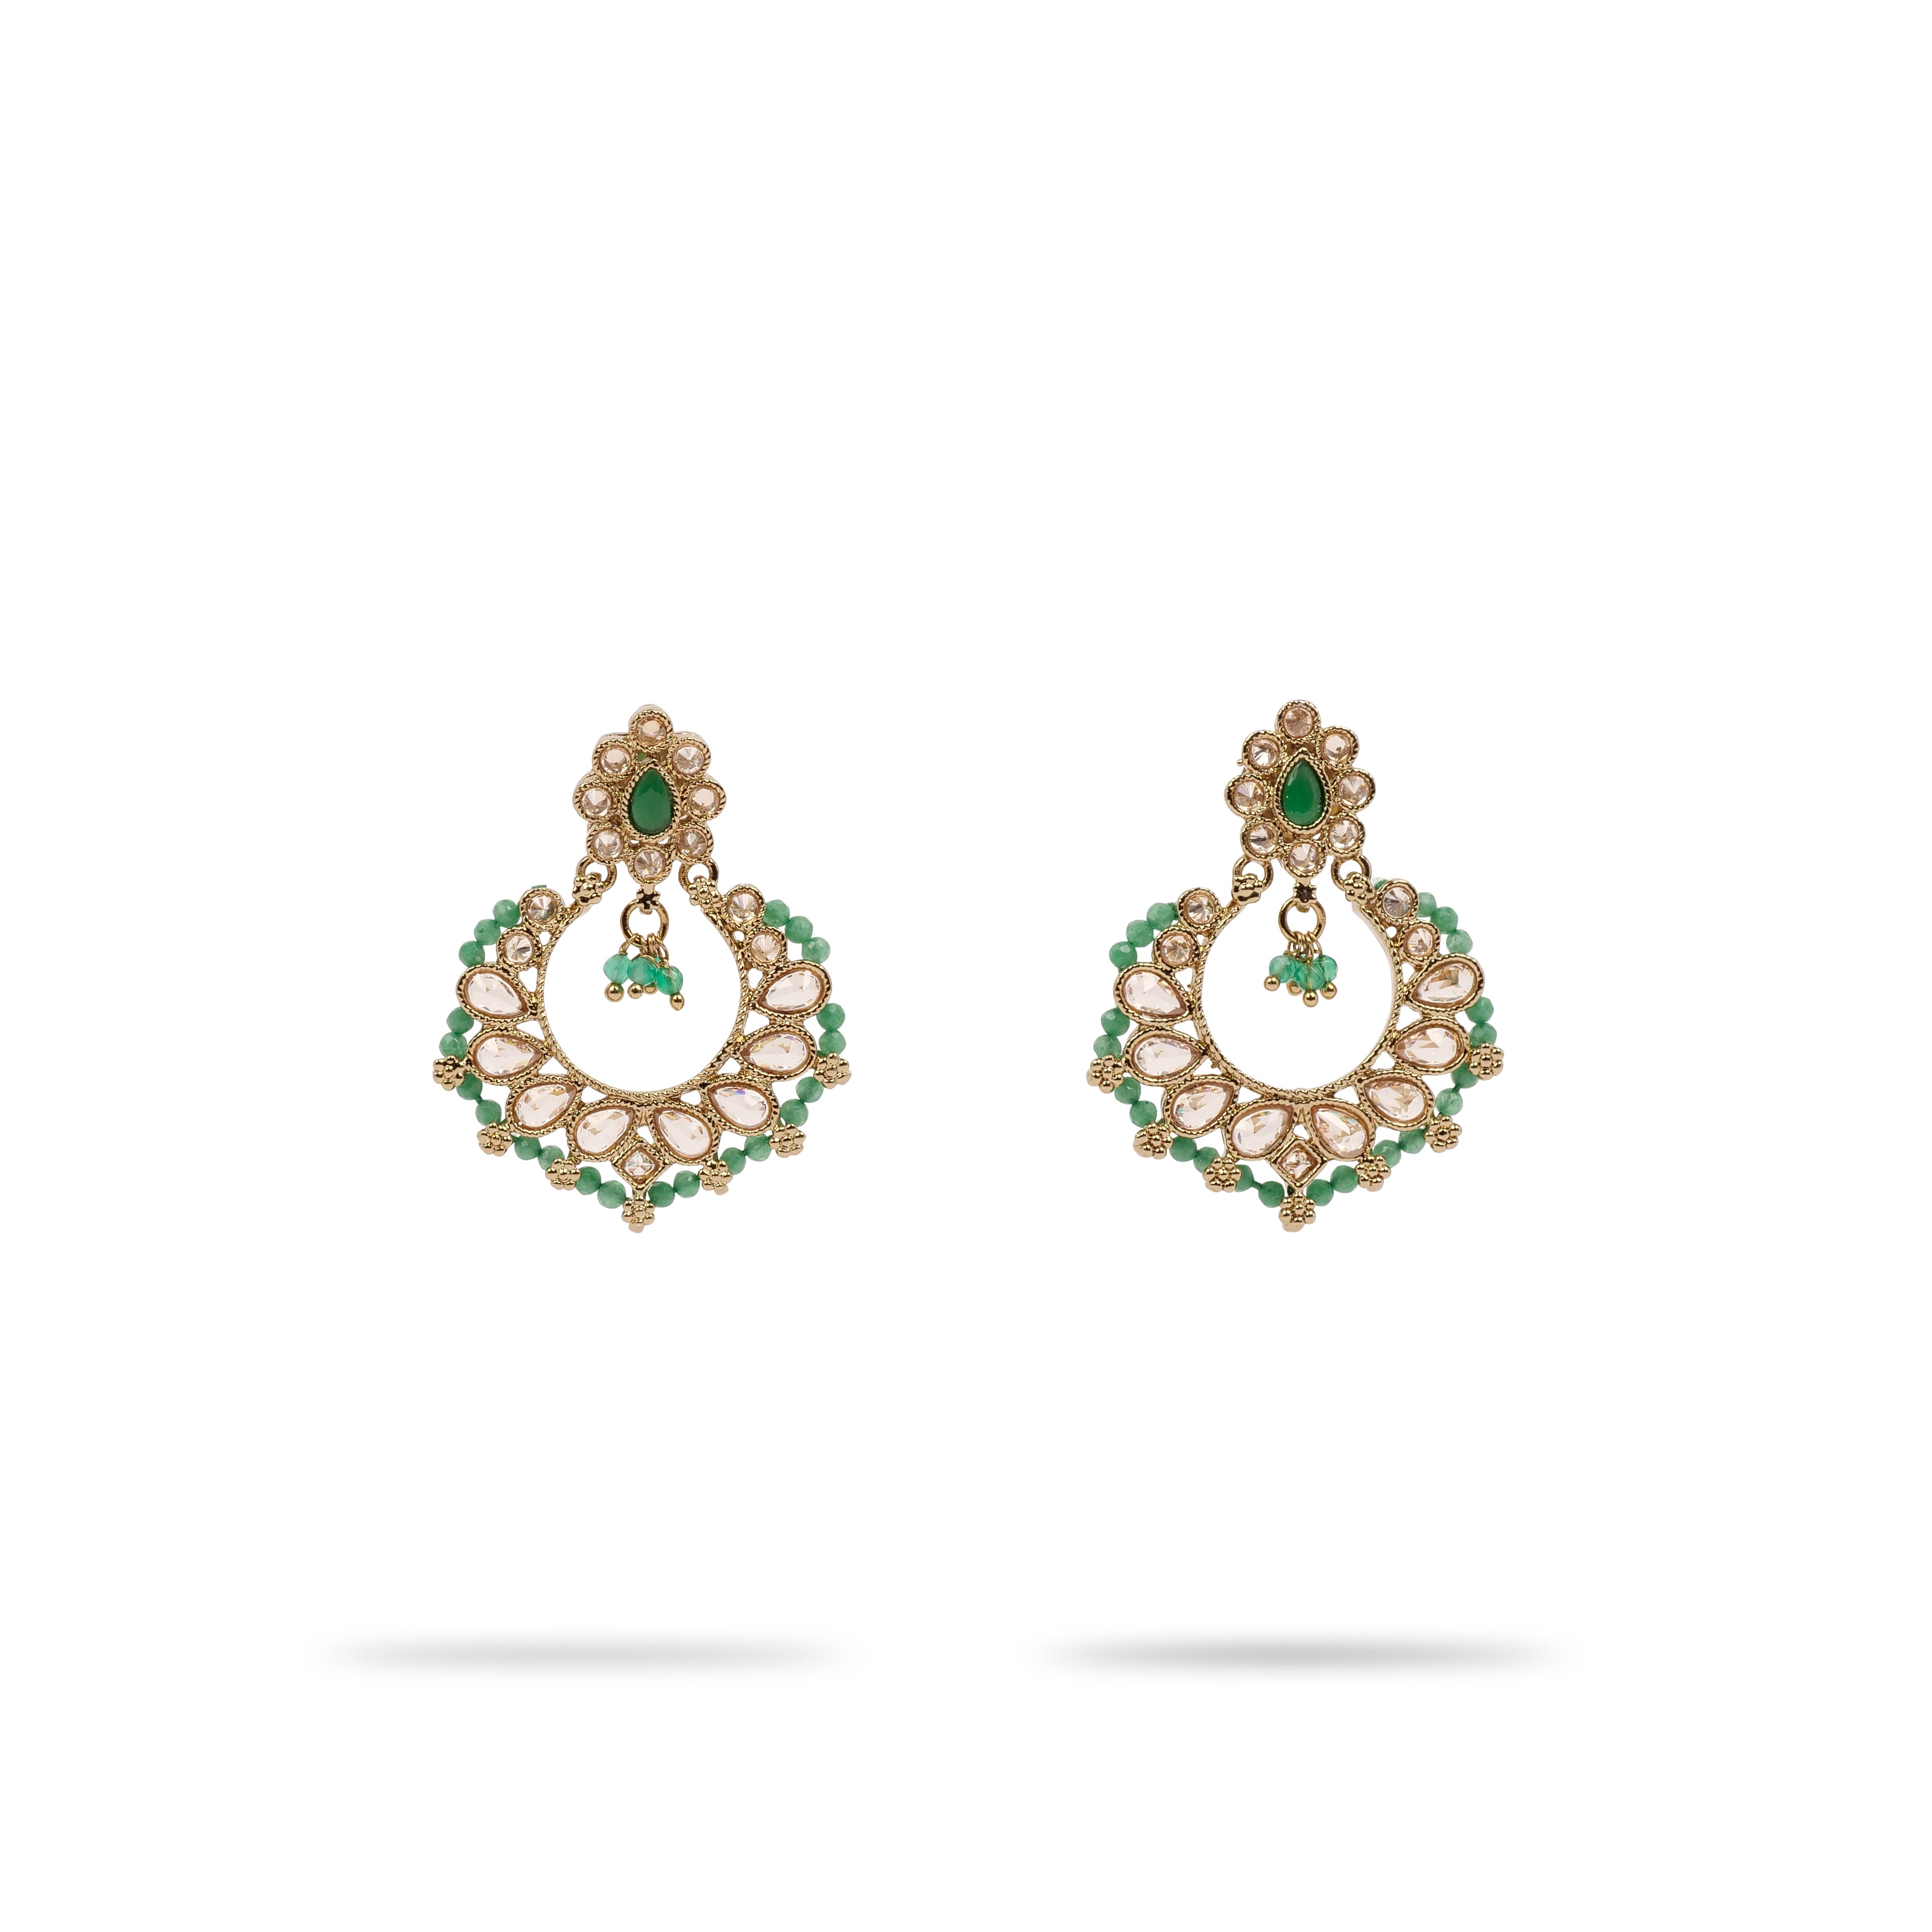 Ethnic Bead-Edge Earrings in Green